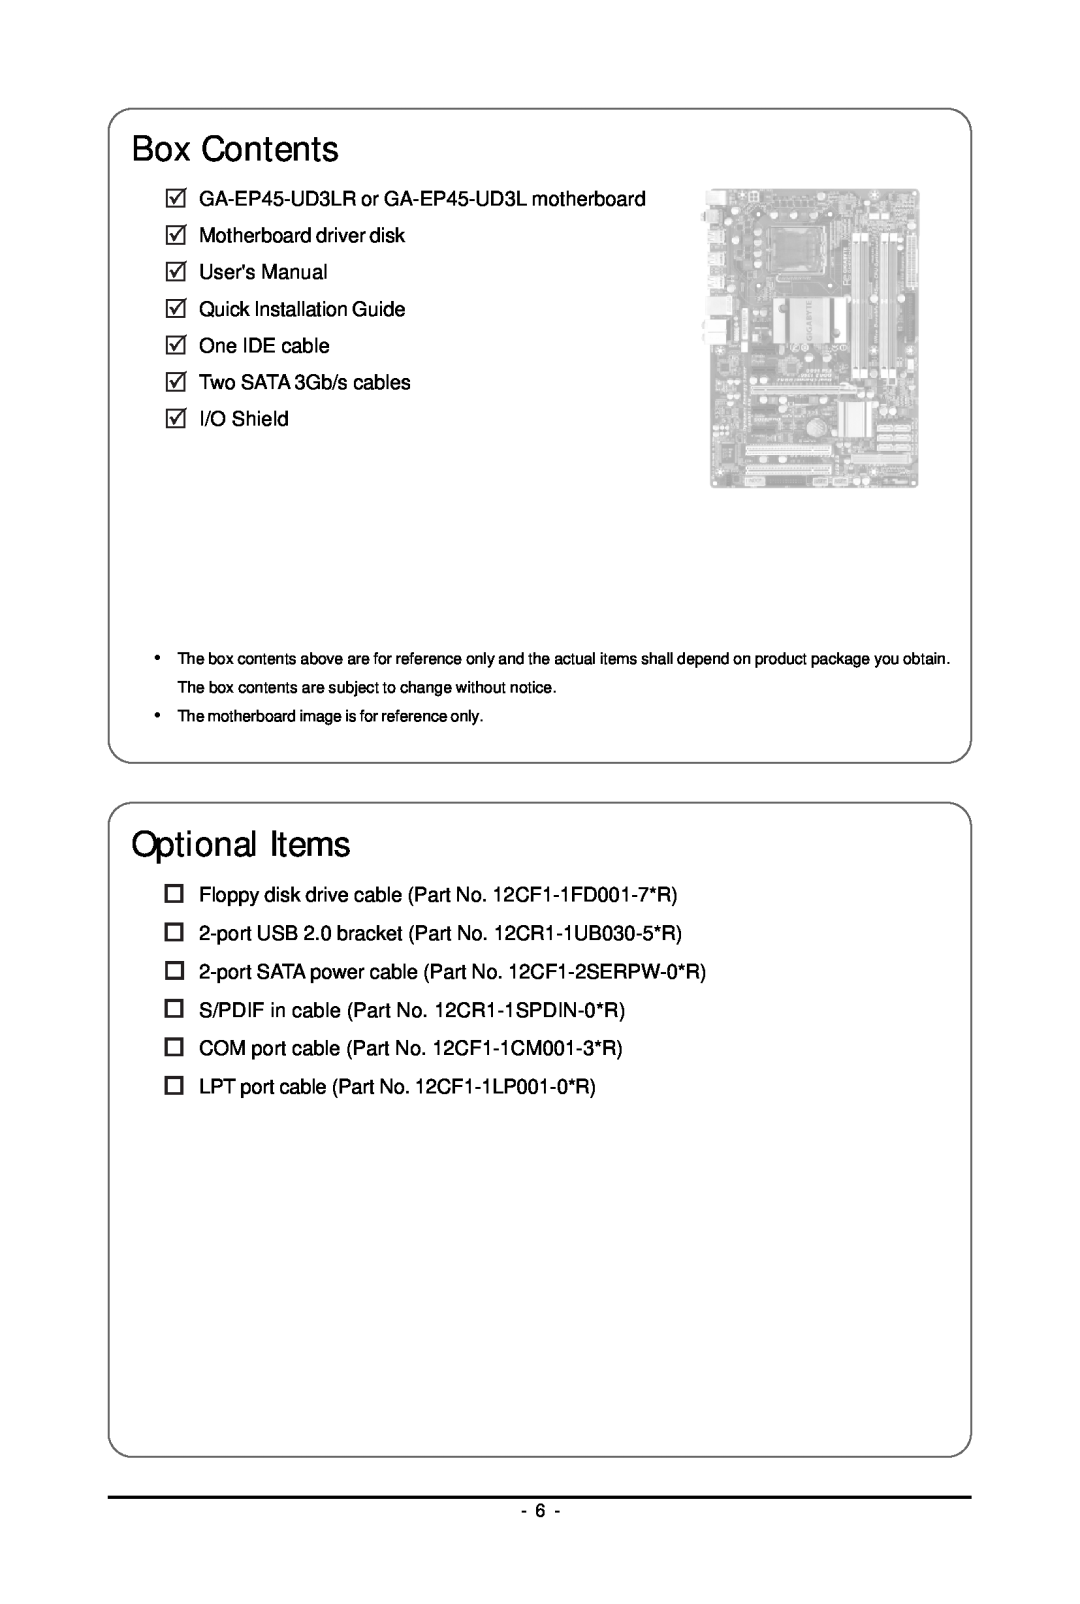 Gigabyte GA-EP45-UD3LR user manual Box Contents, Optional Items 